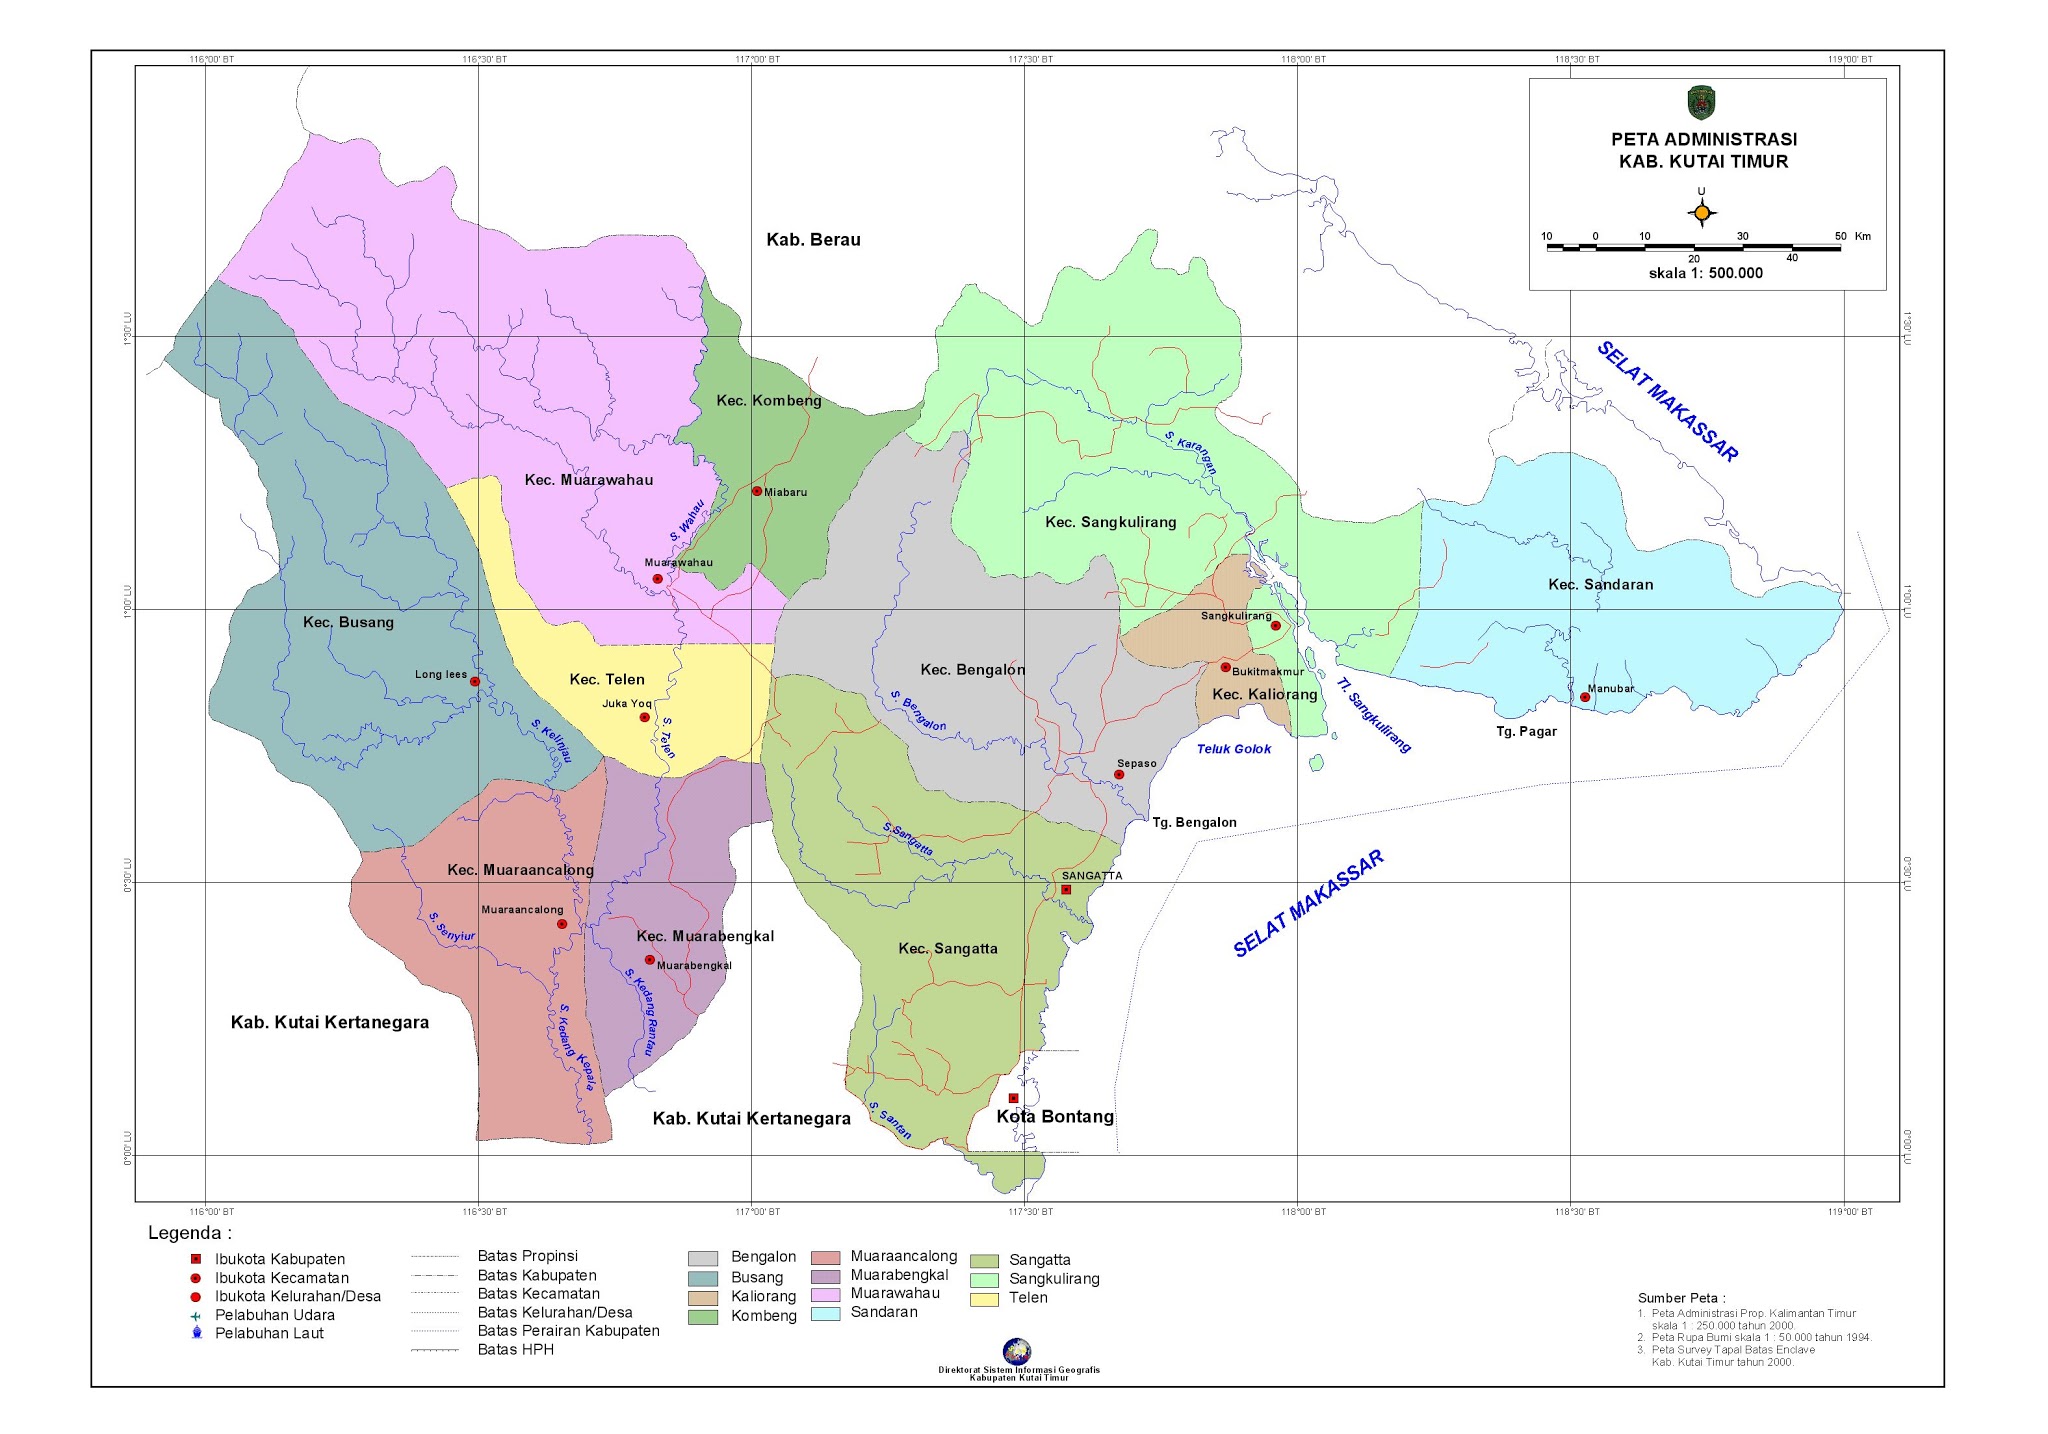 Peta Kota Peta Kabupaten Kutai Timur 